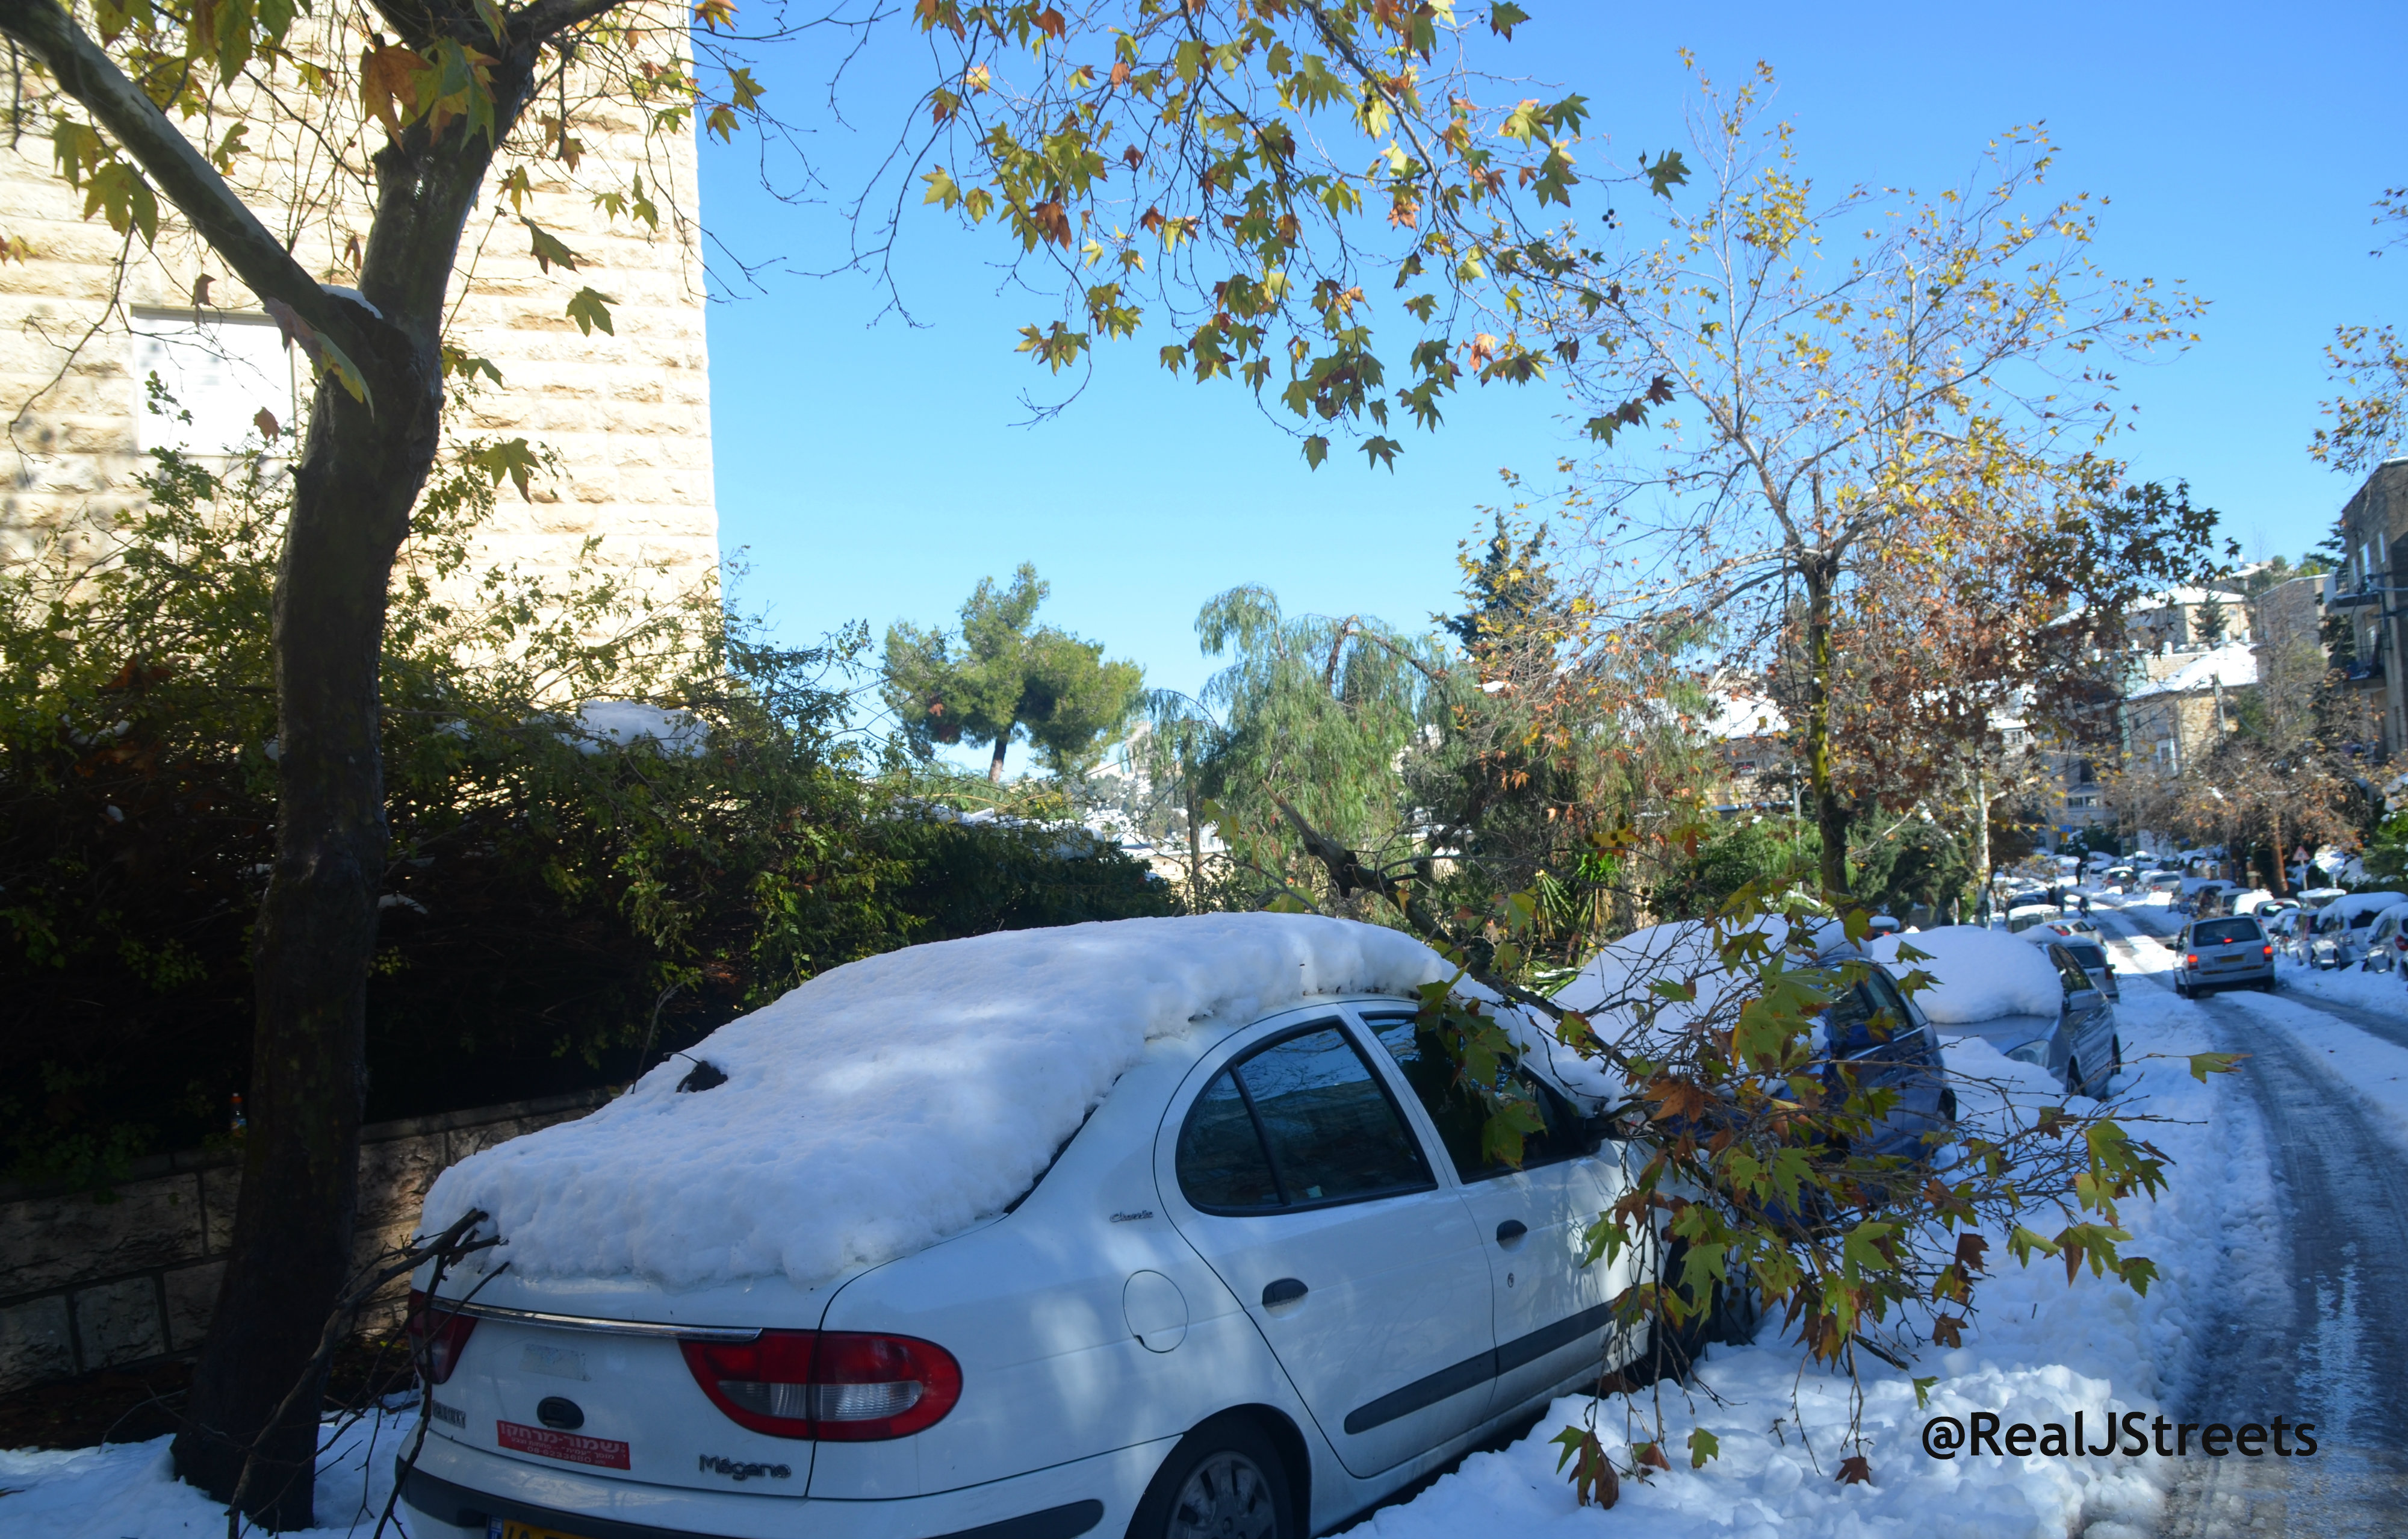 image jerusalem snow, photo damage jerusalem snow, pic snow storm